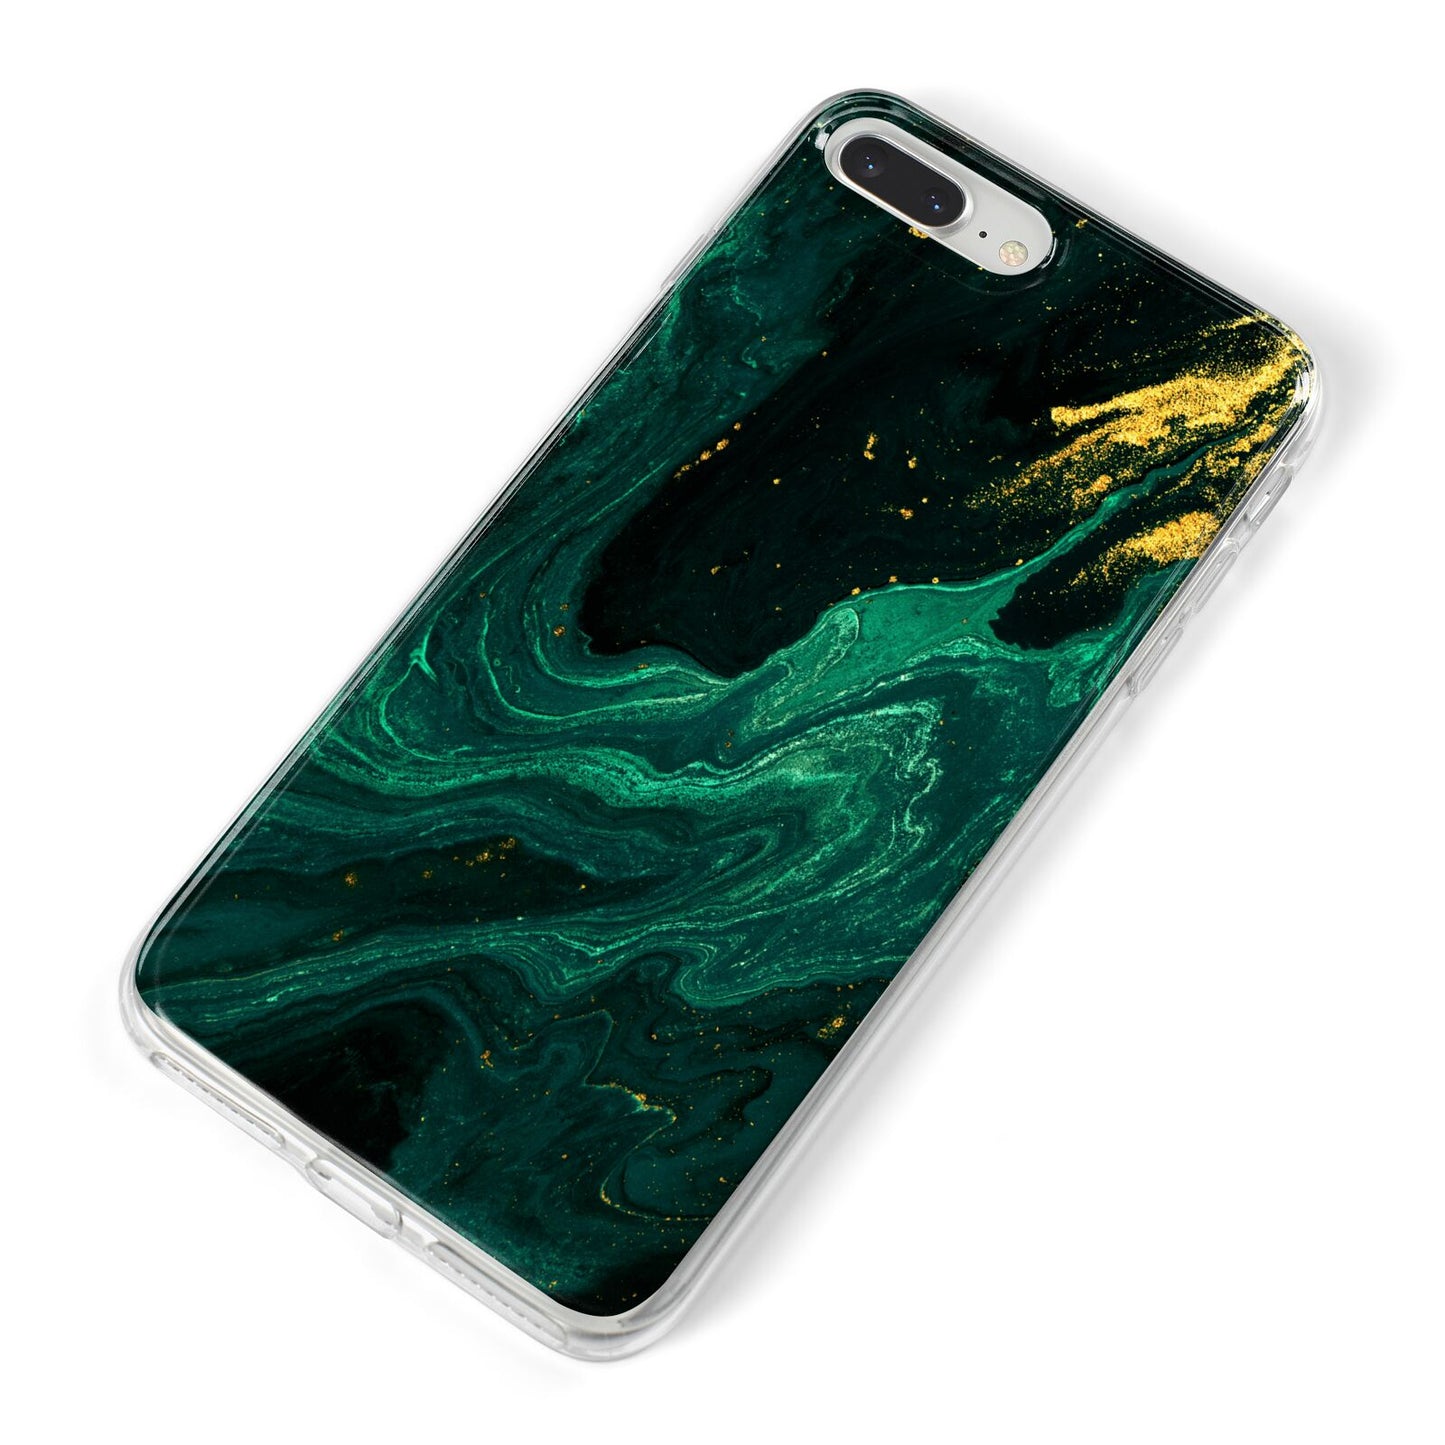 Emerald Green iPhone 8 Plus Bumper Case on Silver iPhone Alternative Image